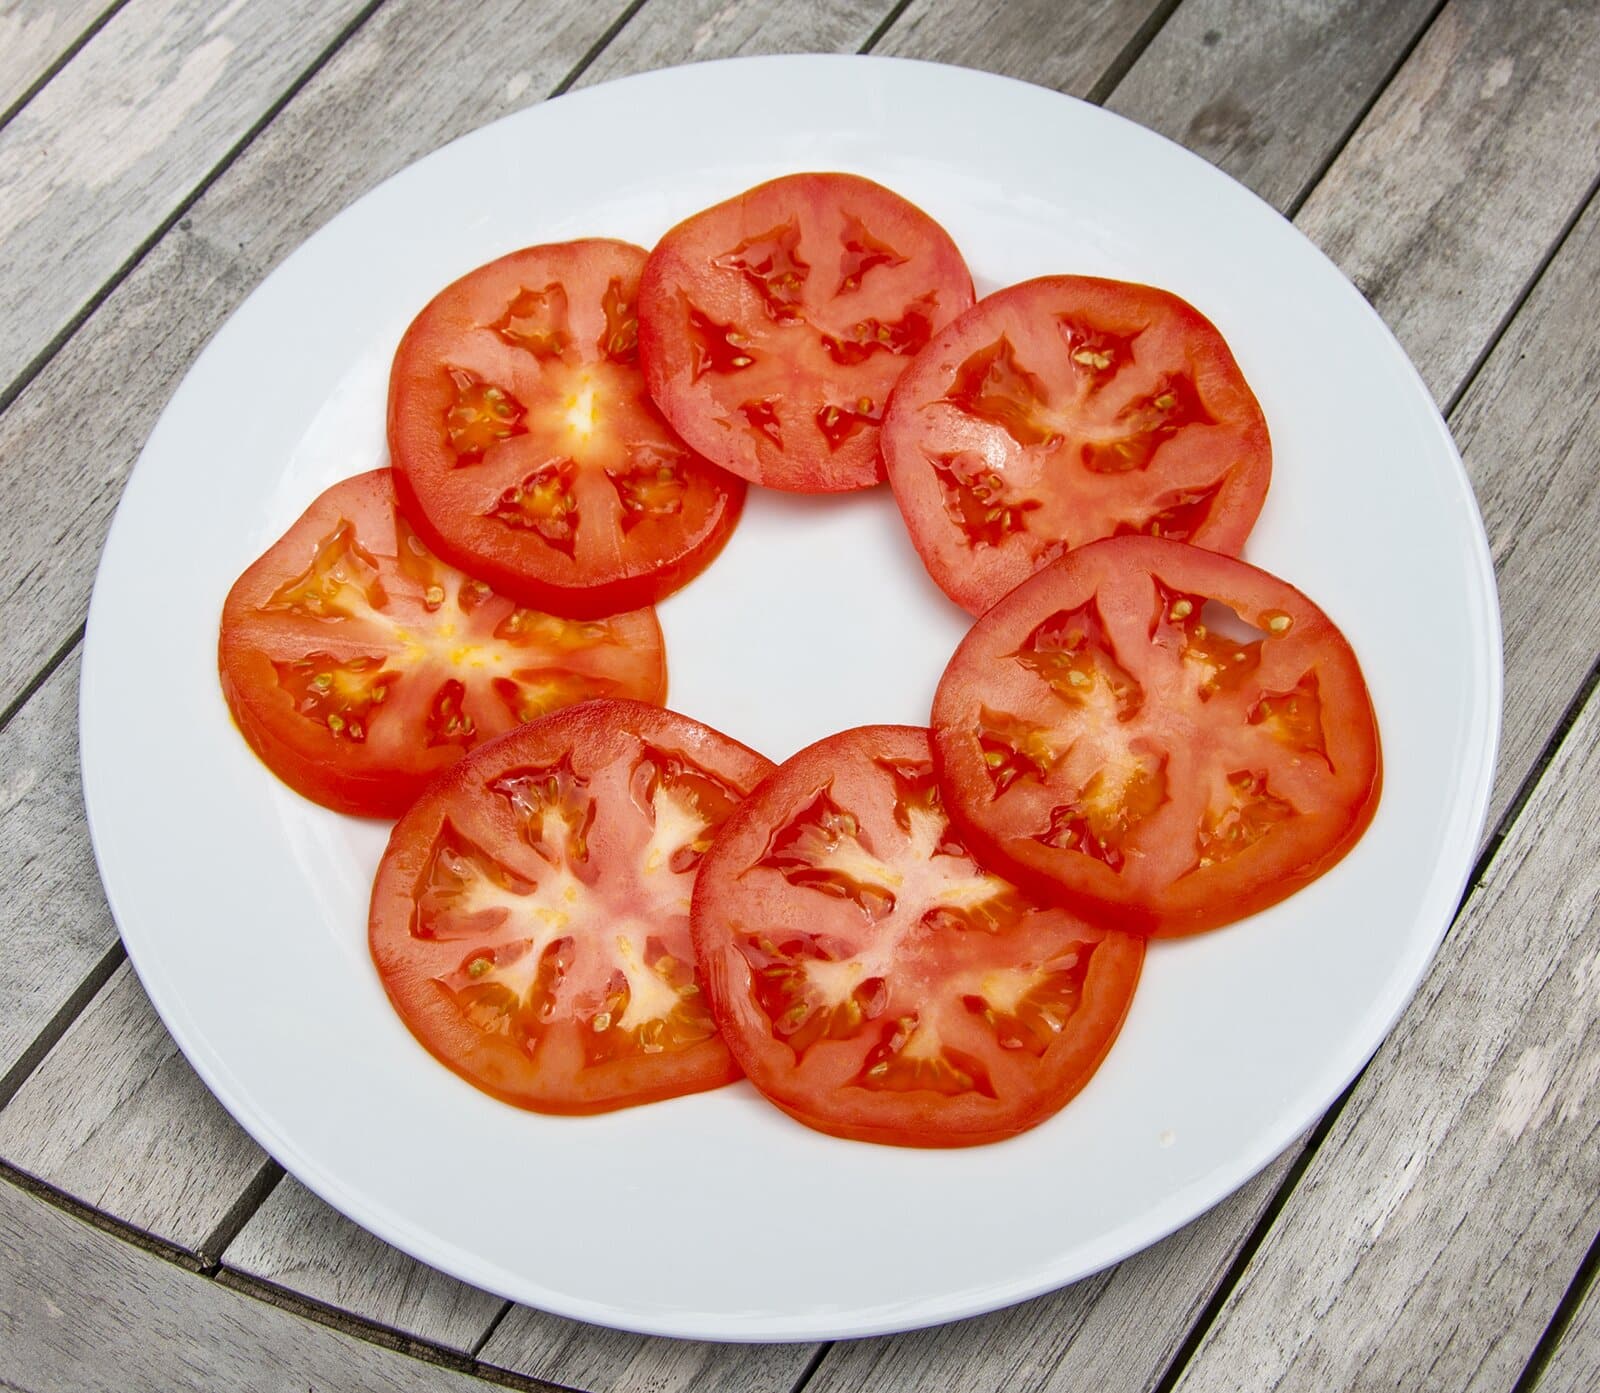 Lay out the tomato on the serbing plate | https://theyumyumclub.com/2019/07/25/burrata-bull-tomato-salad/